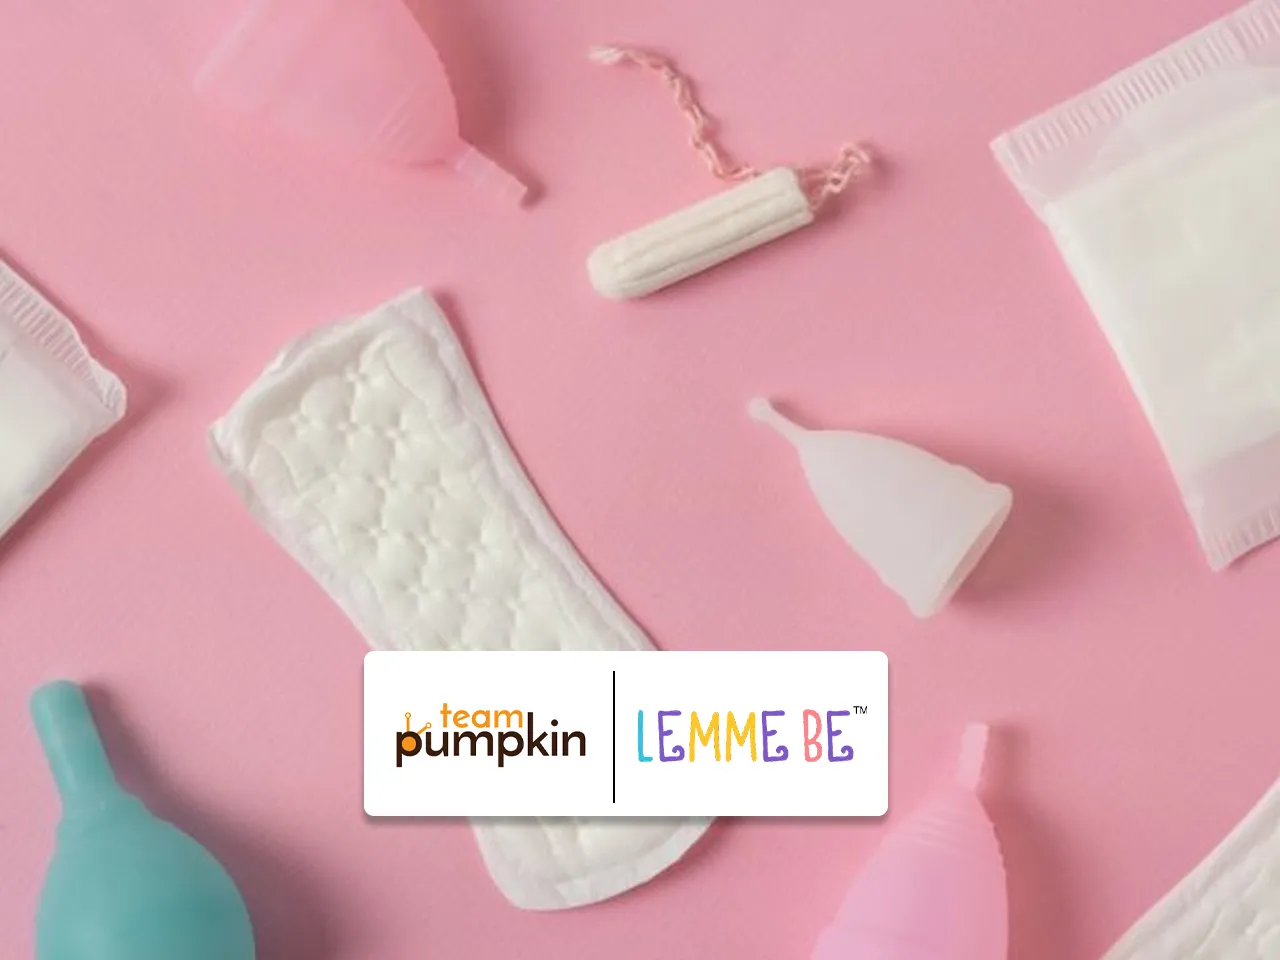 Team Pumpkin secures Lemme Be's marketing mandate